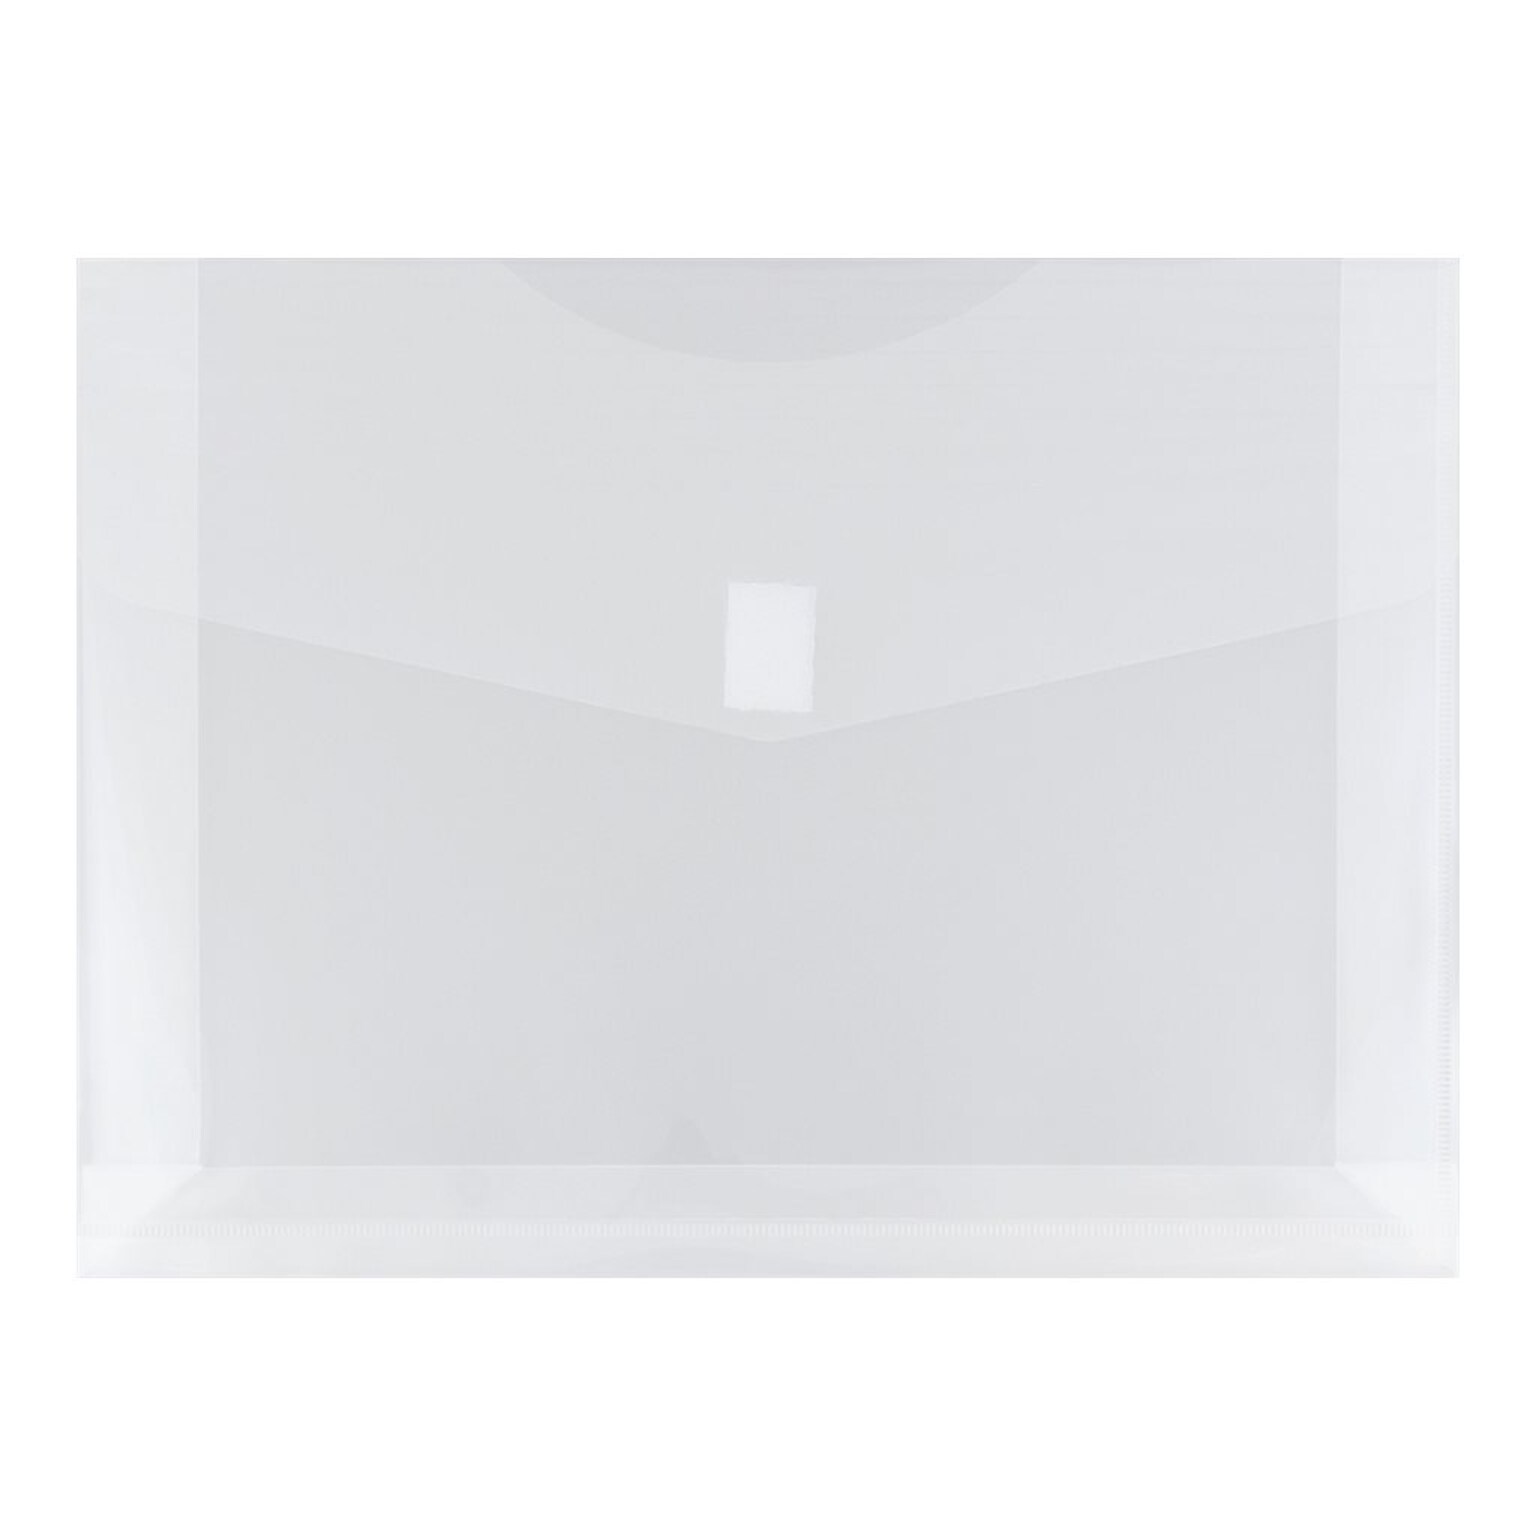 JAM Paper Poly Envelope with Hook & Loop Closure, 2 Expansion, Letter Size, Clear, 12/Pack (218V2CL)